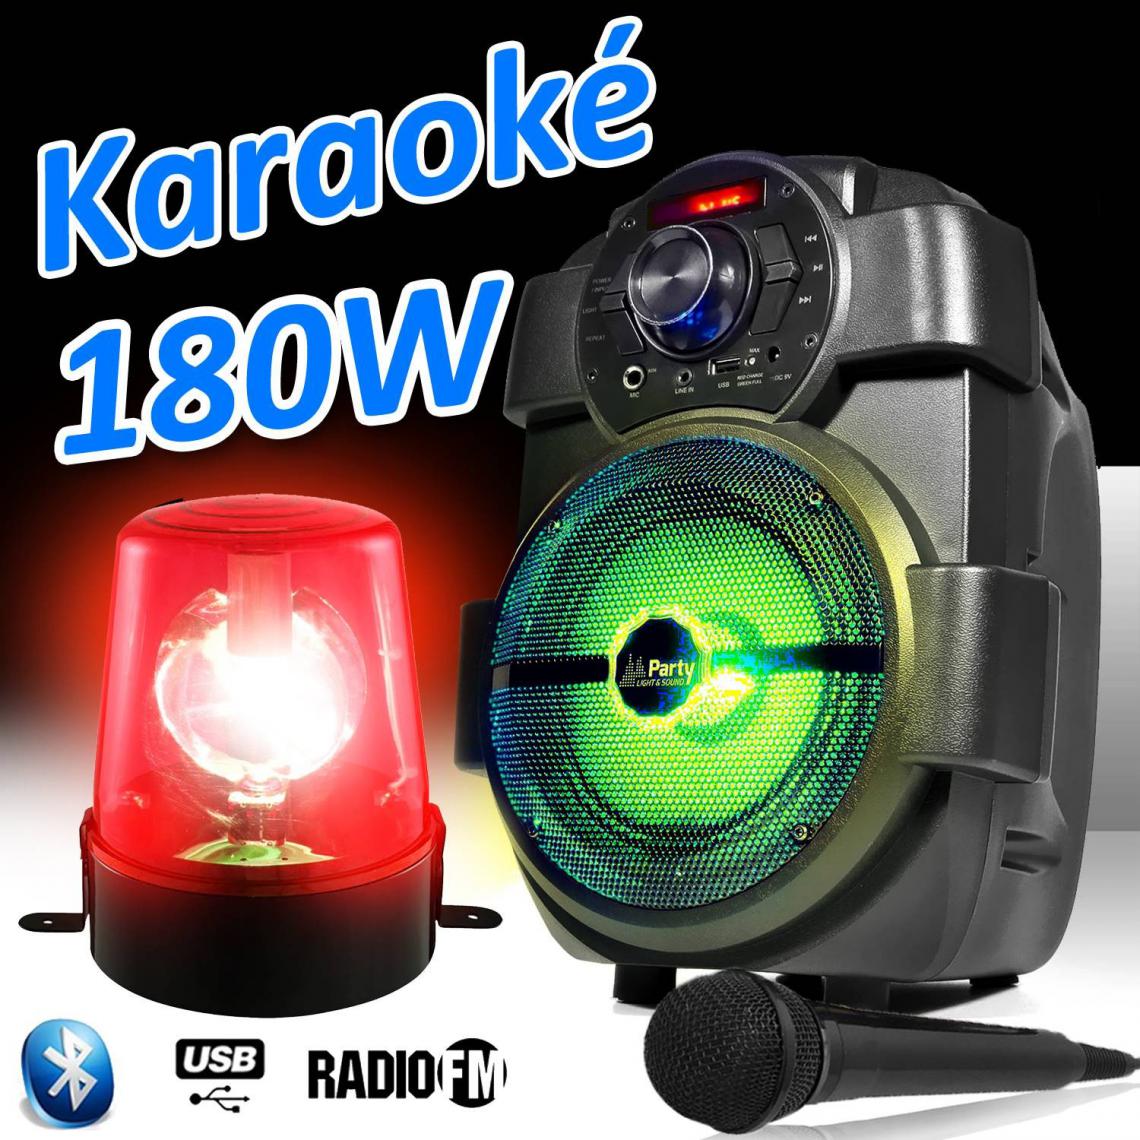 Party Sound - ENCEINTE PARTY KARAOKE 180W portable Batterie MICRO HANDY180 avec USB/BLUETOOTH/ RADIO FM + Gyrophare Rouge - Enceintes Hifi